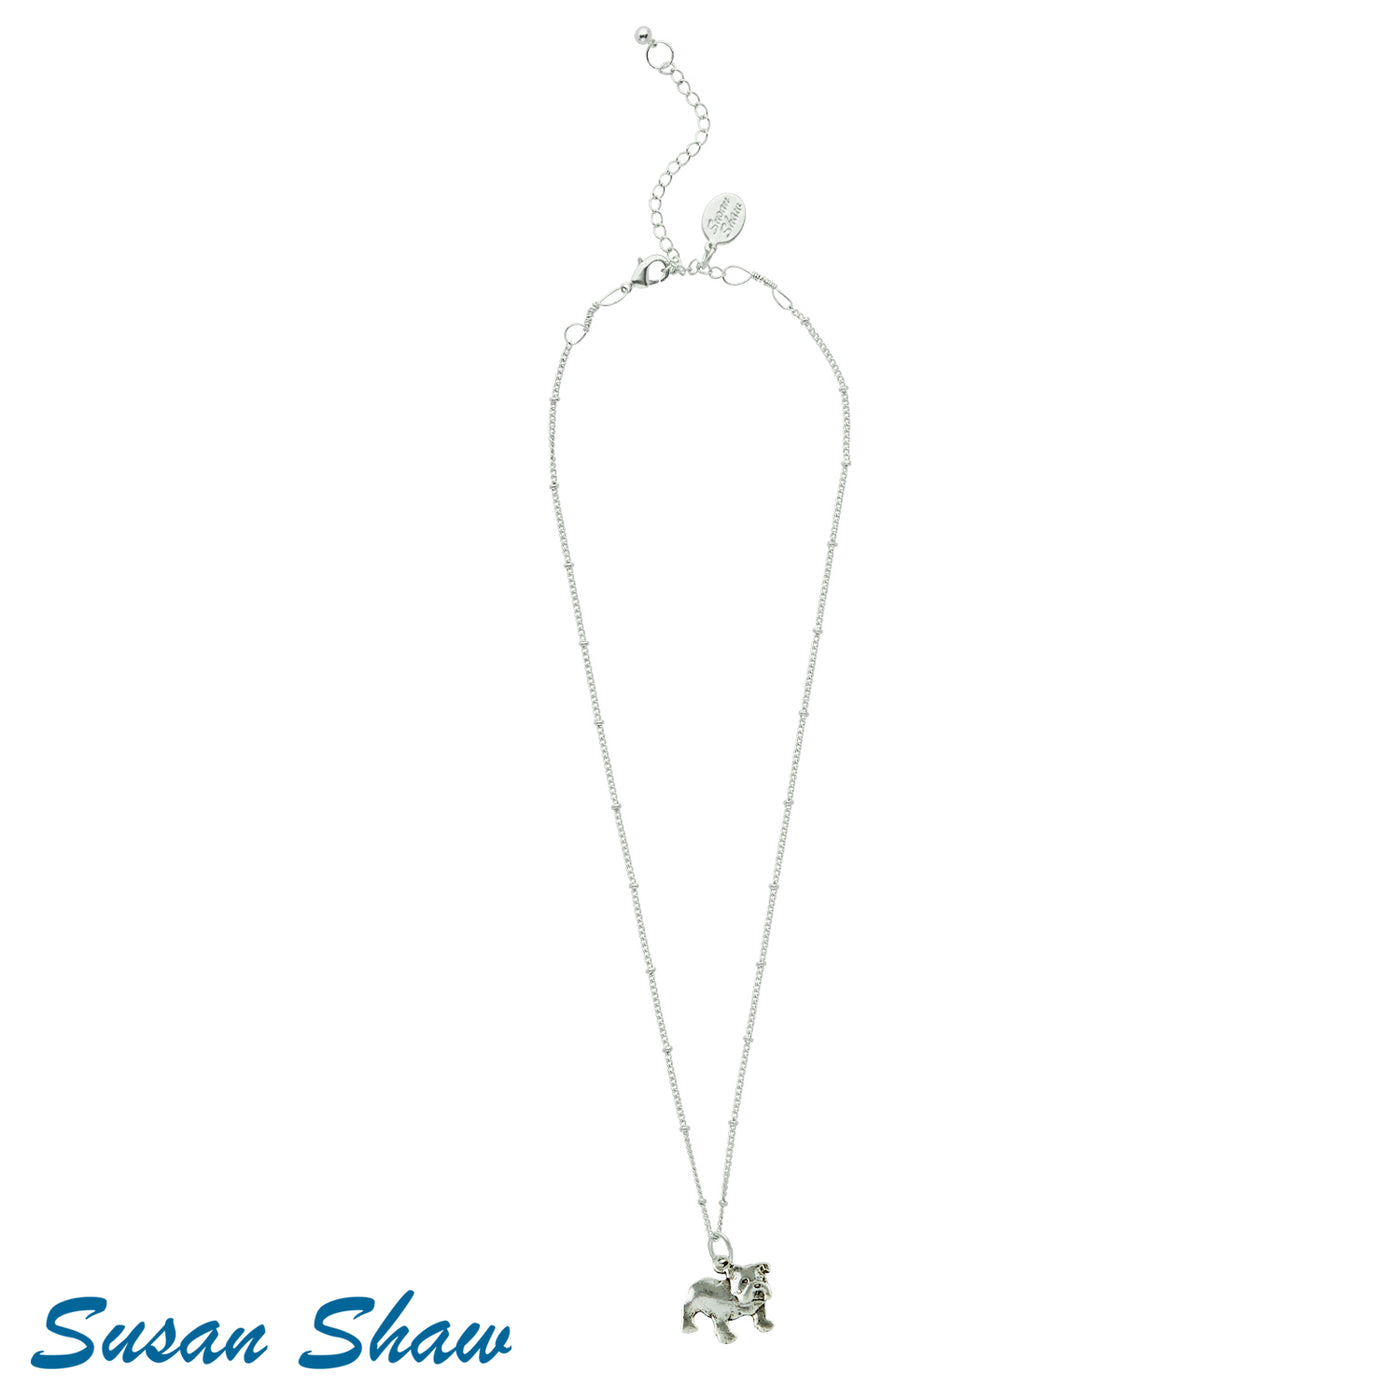 Susan Shaw Dainty Bulldog Necklace